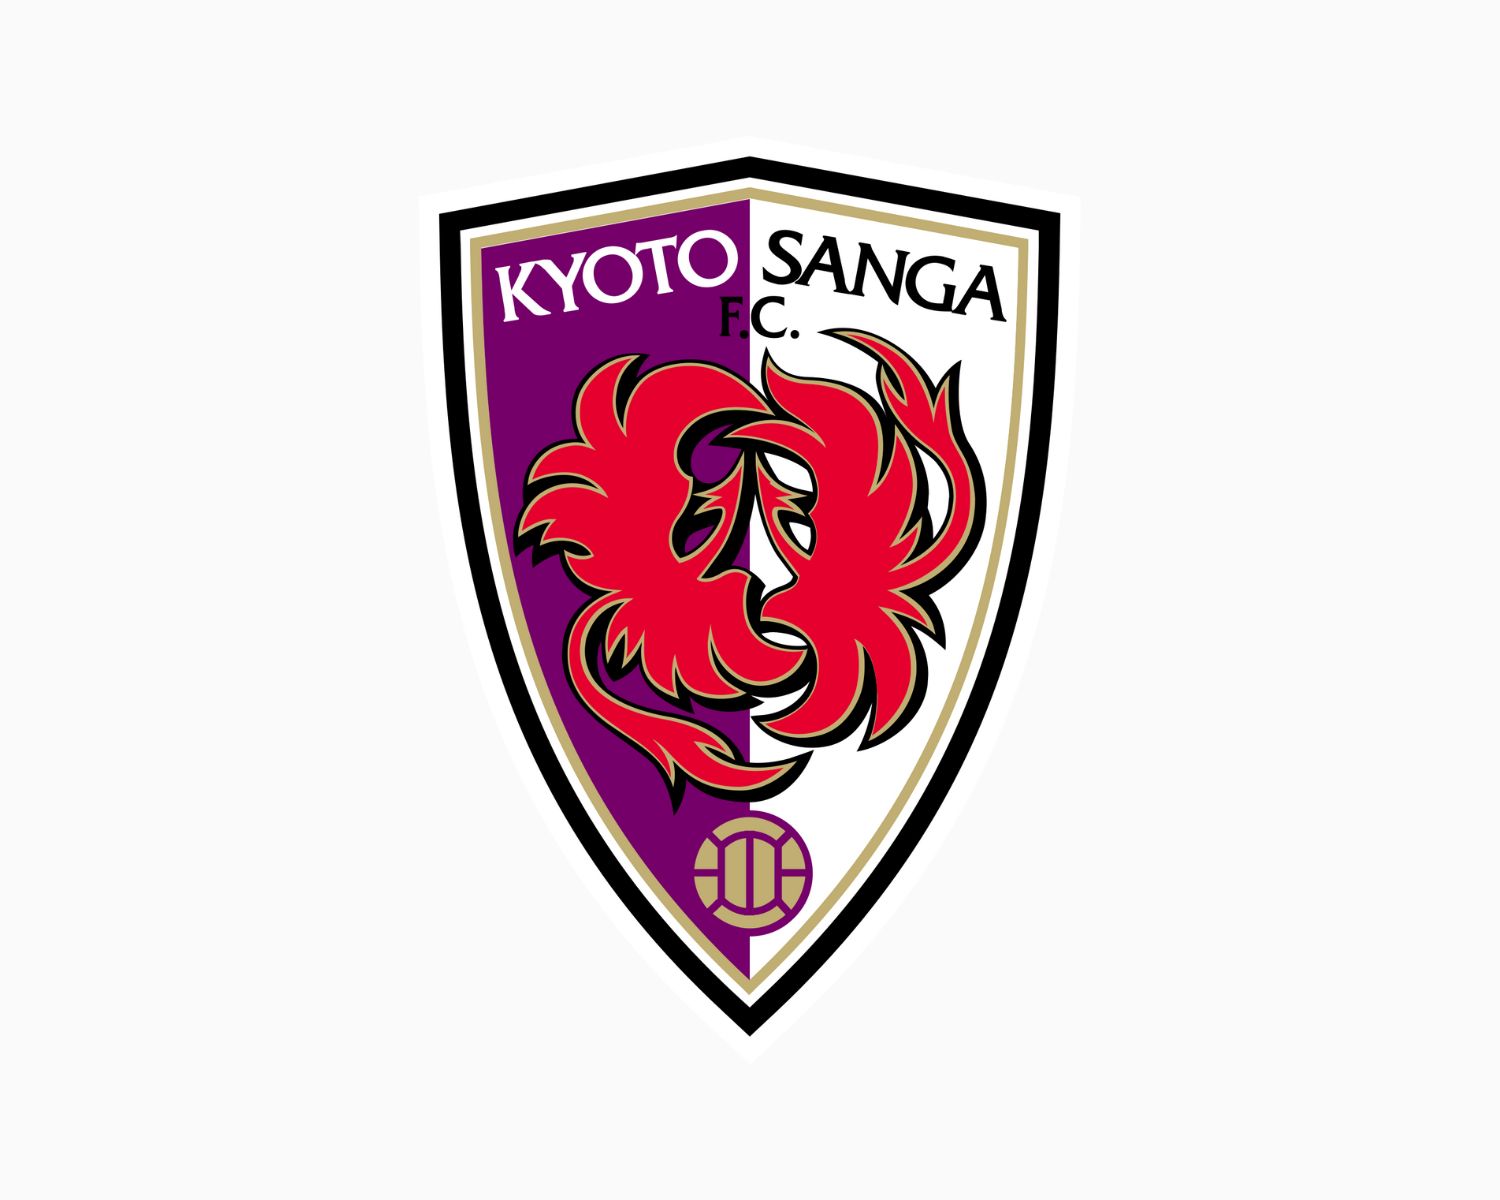 kyoto-sanga-fc-23-football-club-facts